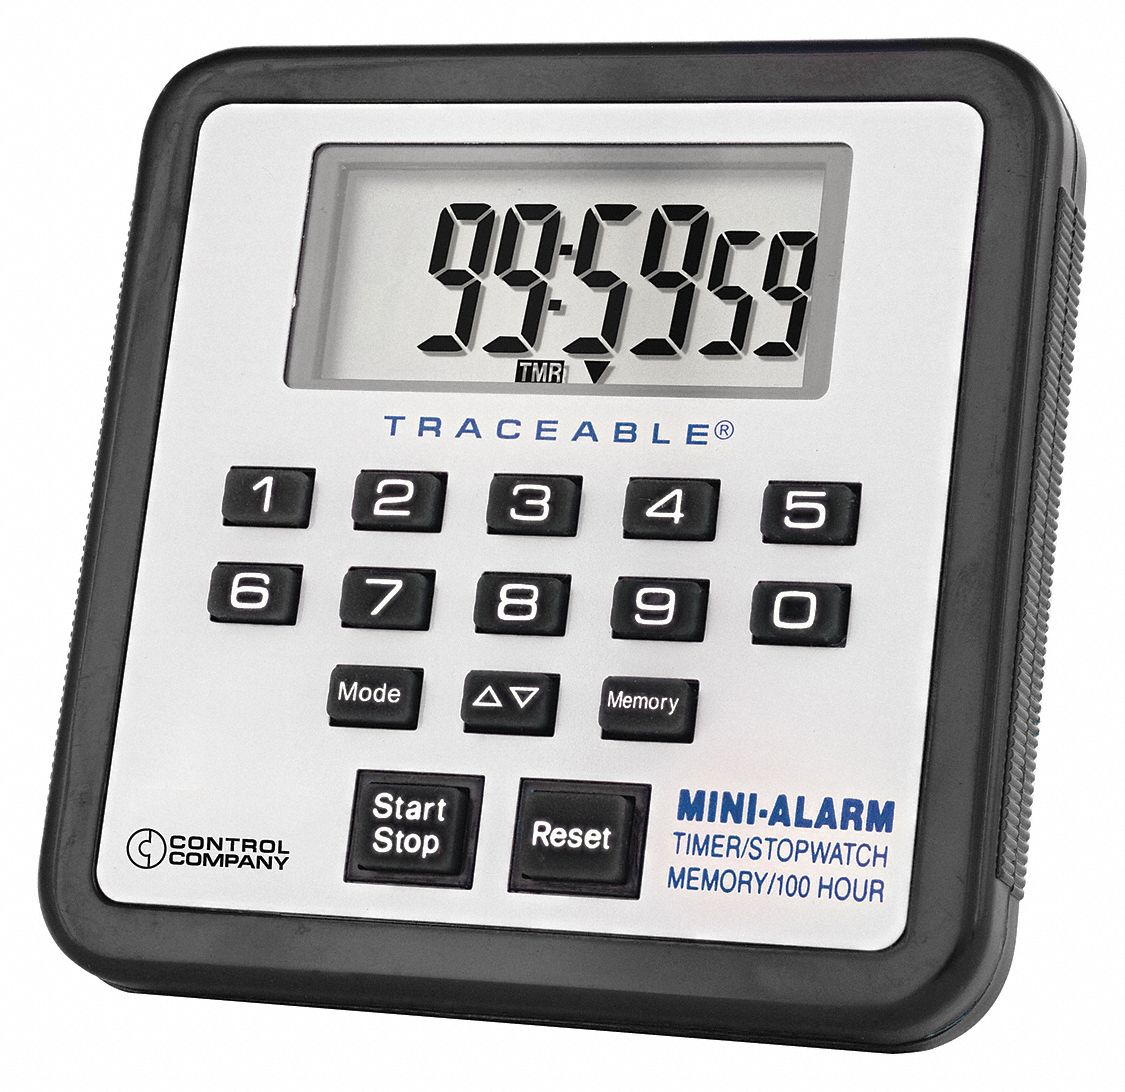 33Y706 - 100-Hour Mini-Alarm Timer/Stopwatch